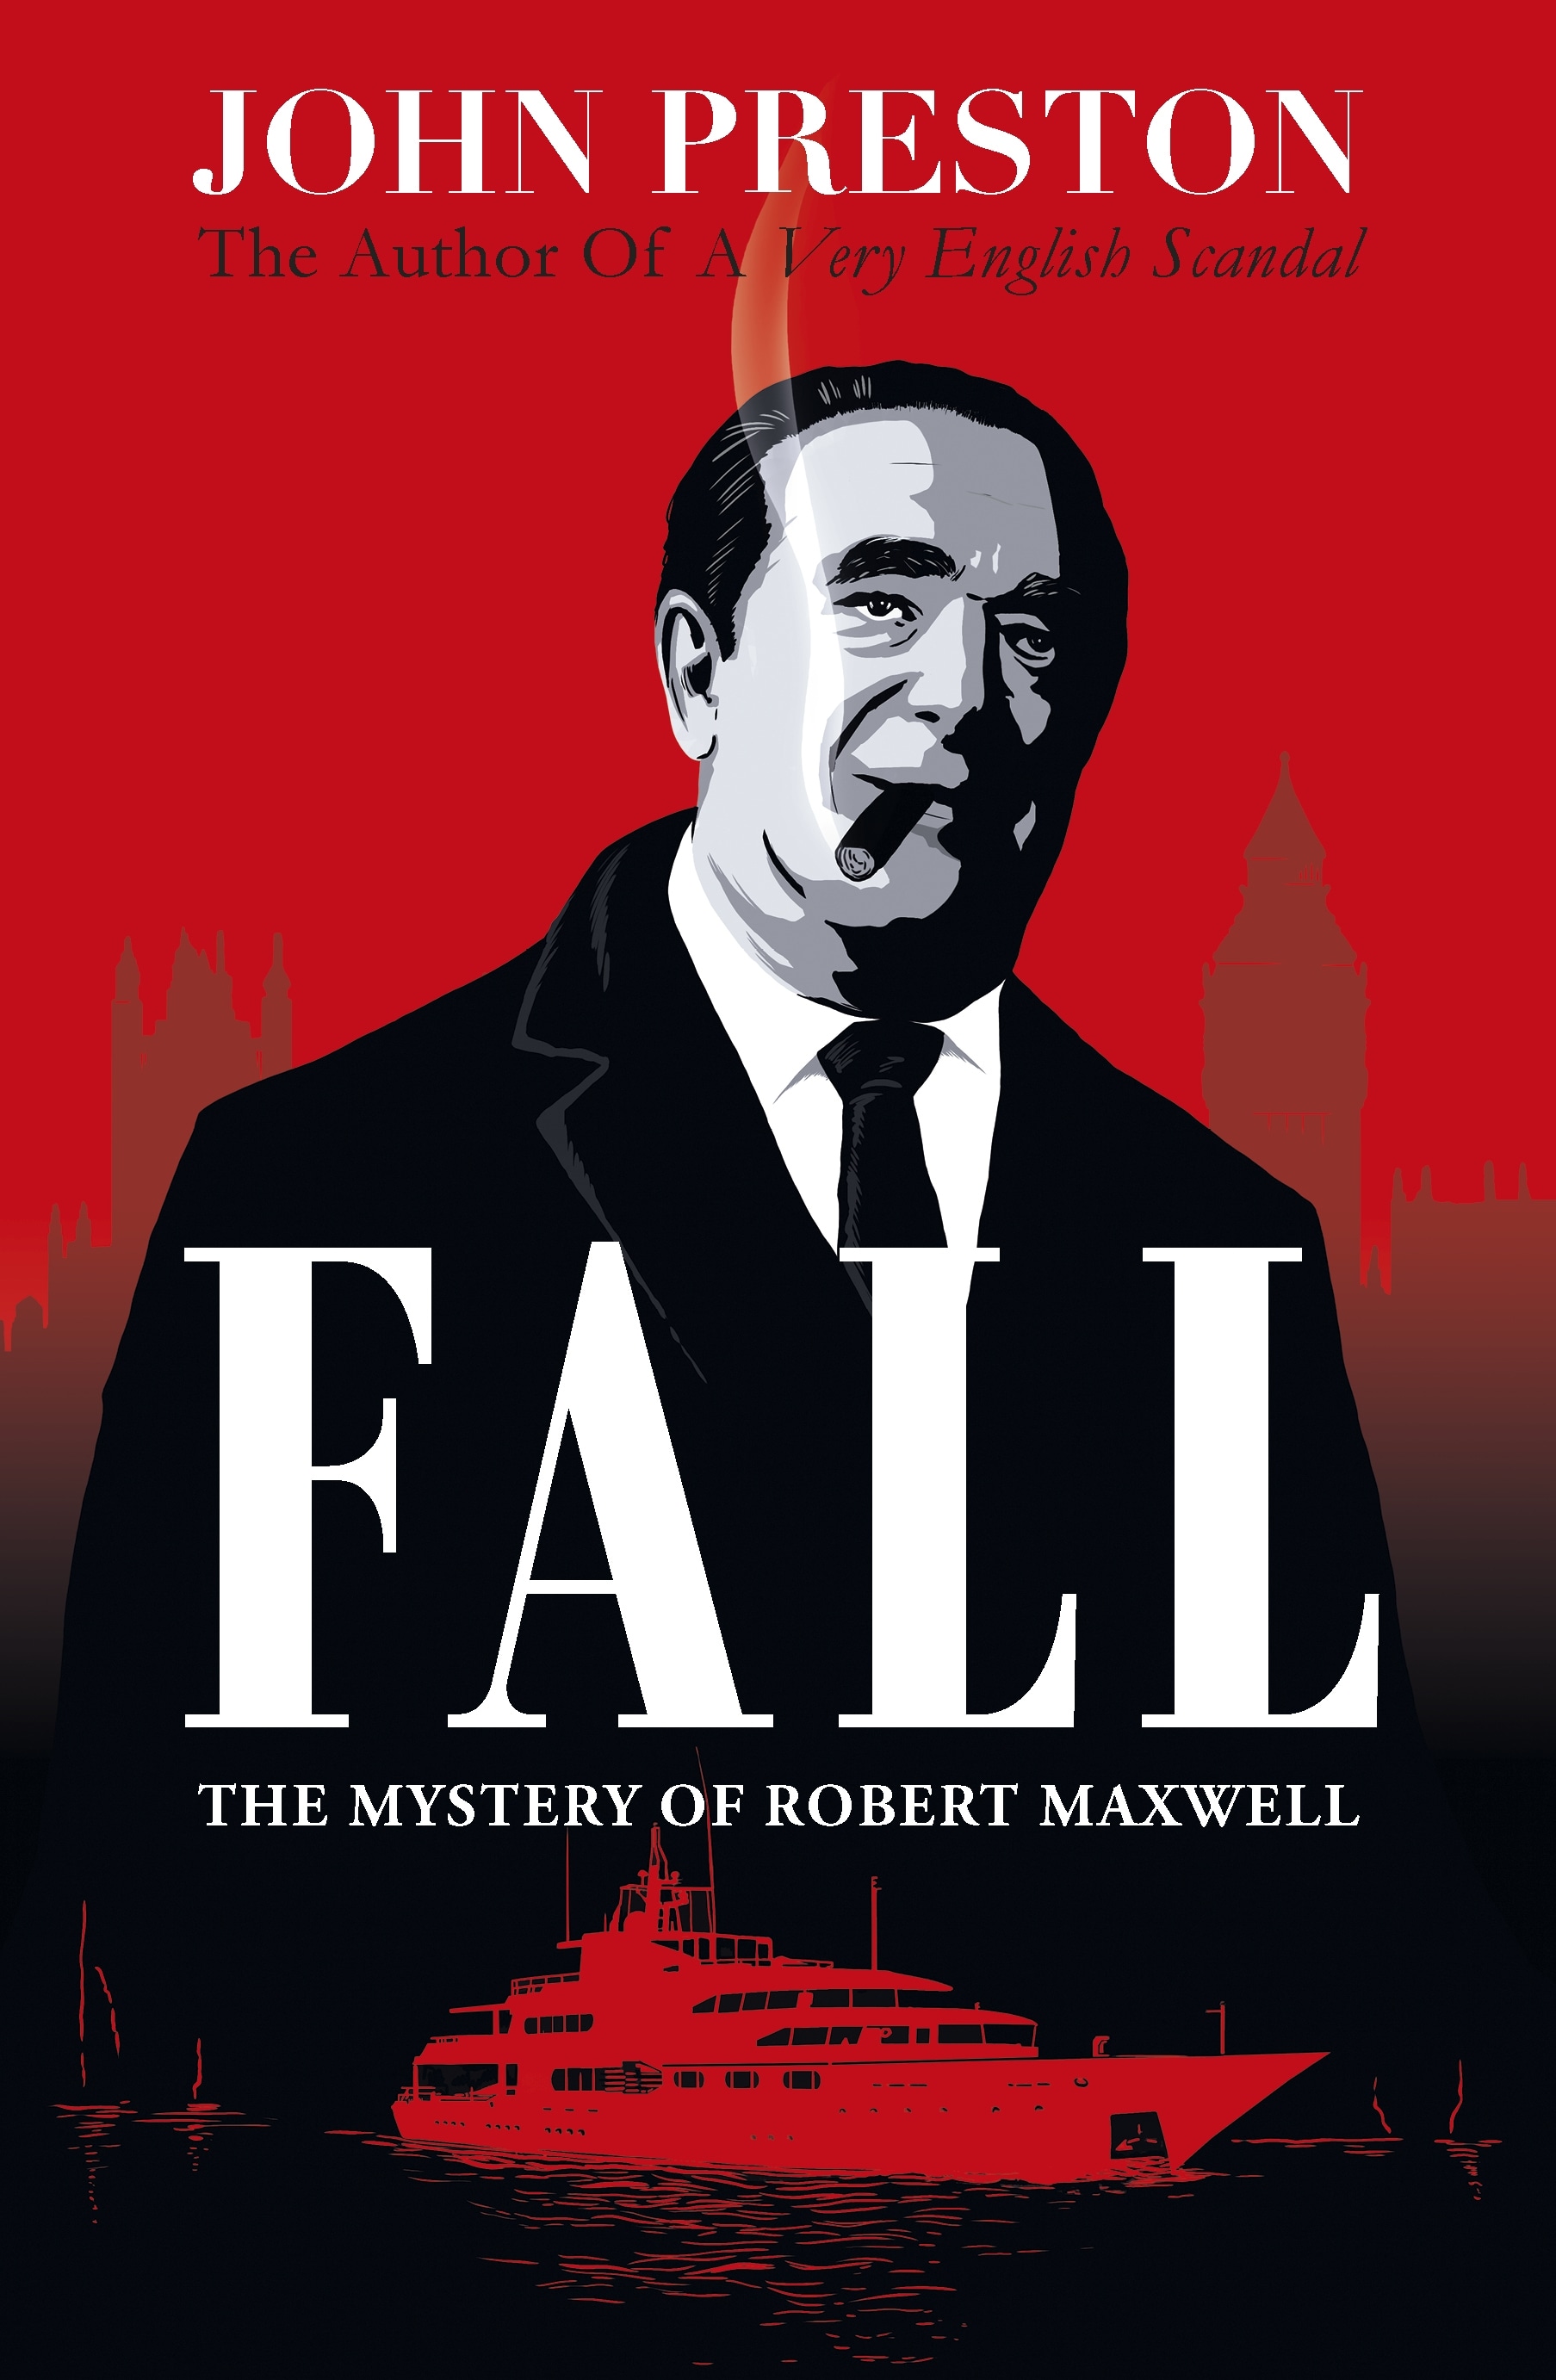 Book “Fall” by John Preston — February 4, 2021